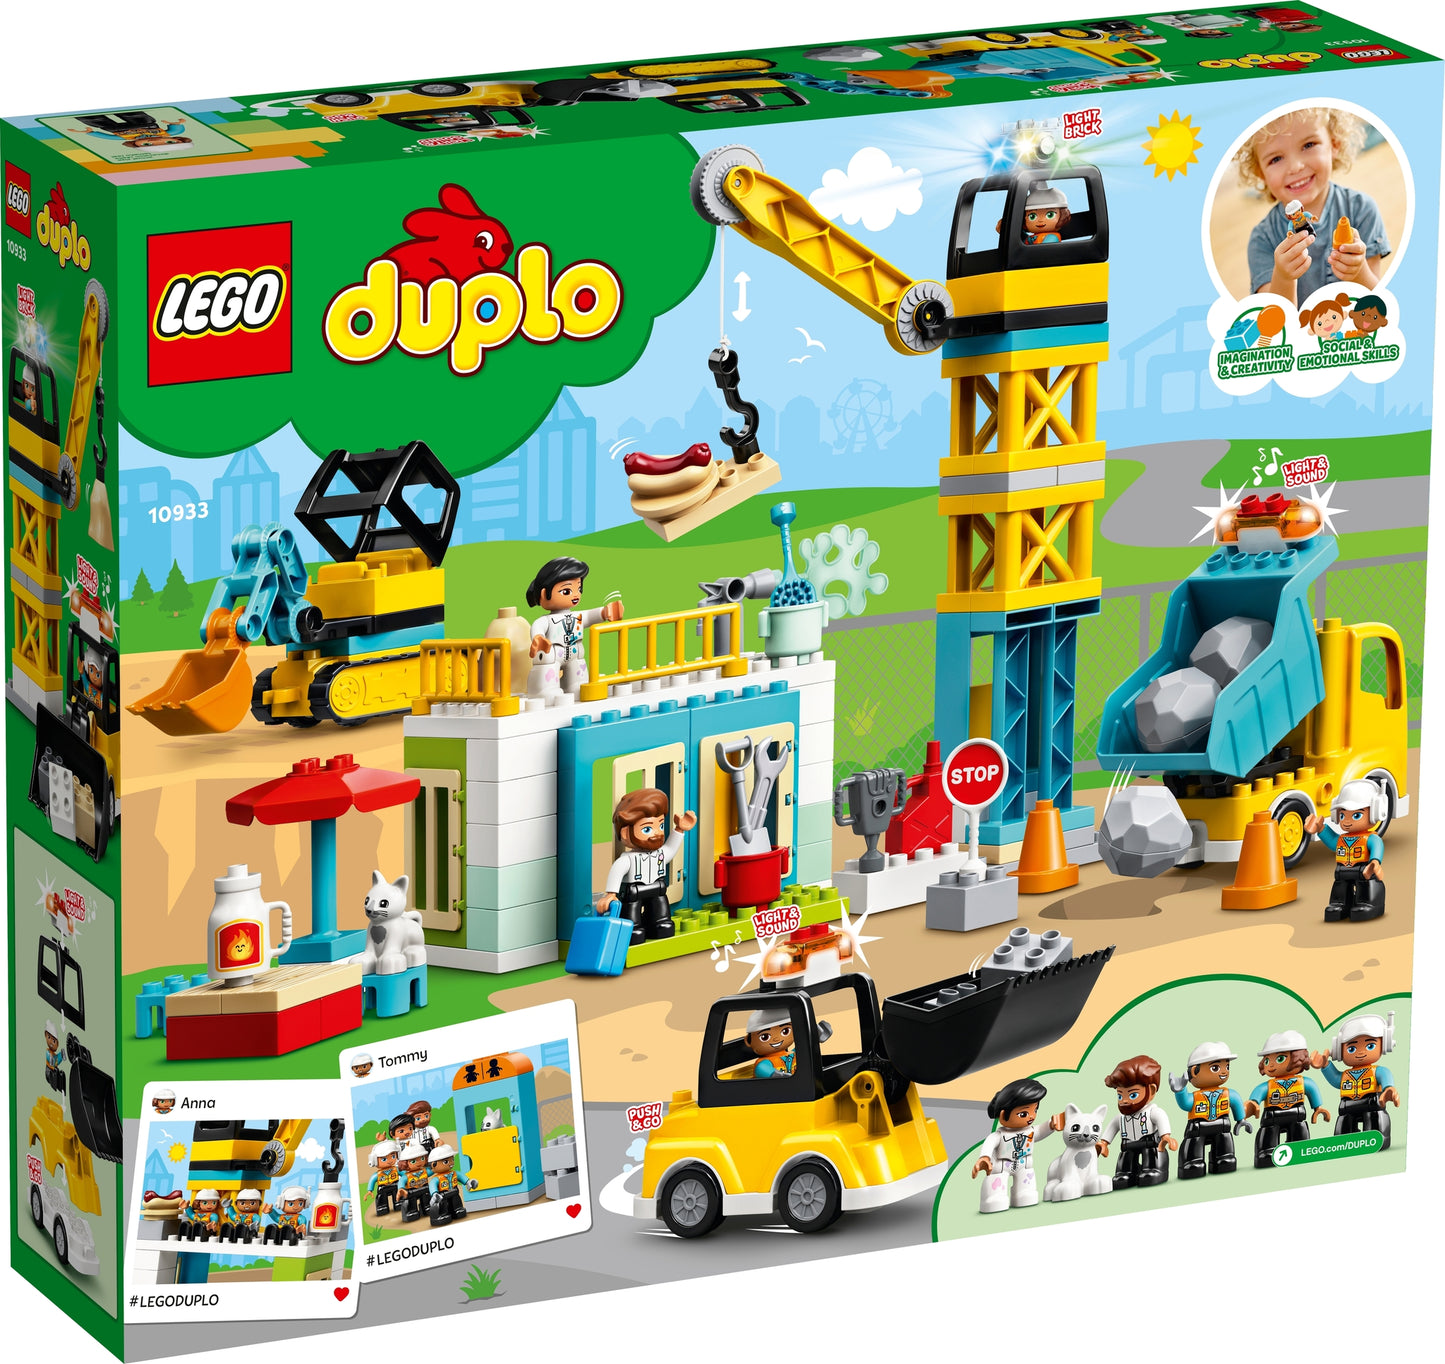 10933 LEGO Duplo - Cantiere Edile con Gru a Torre